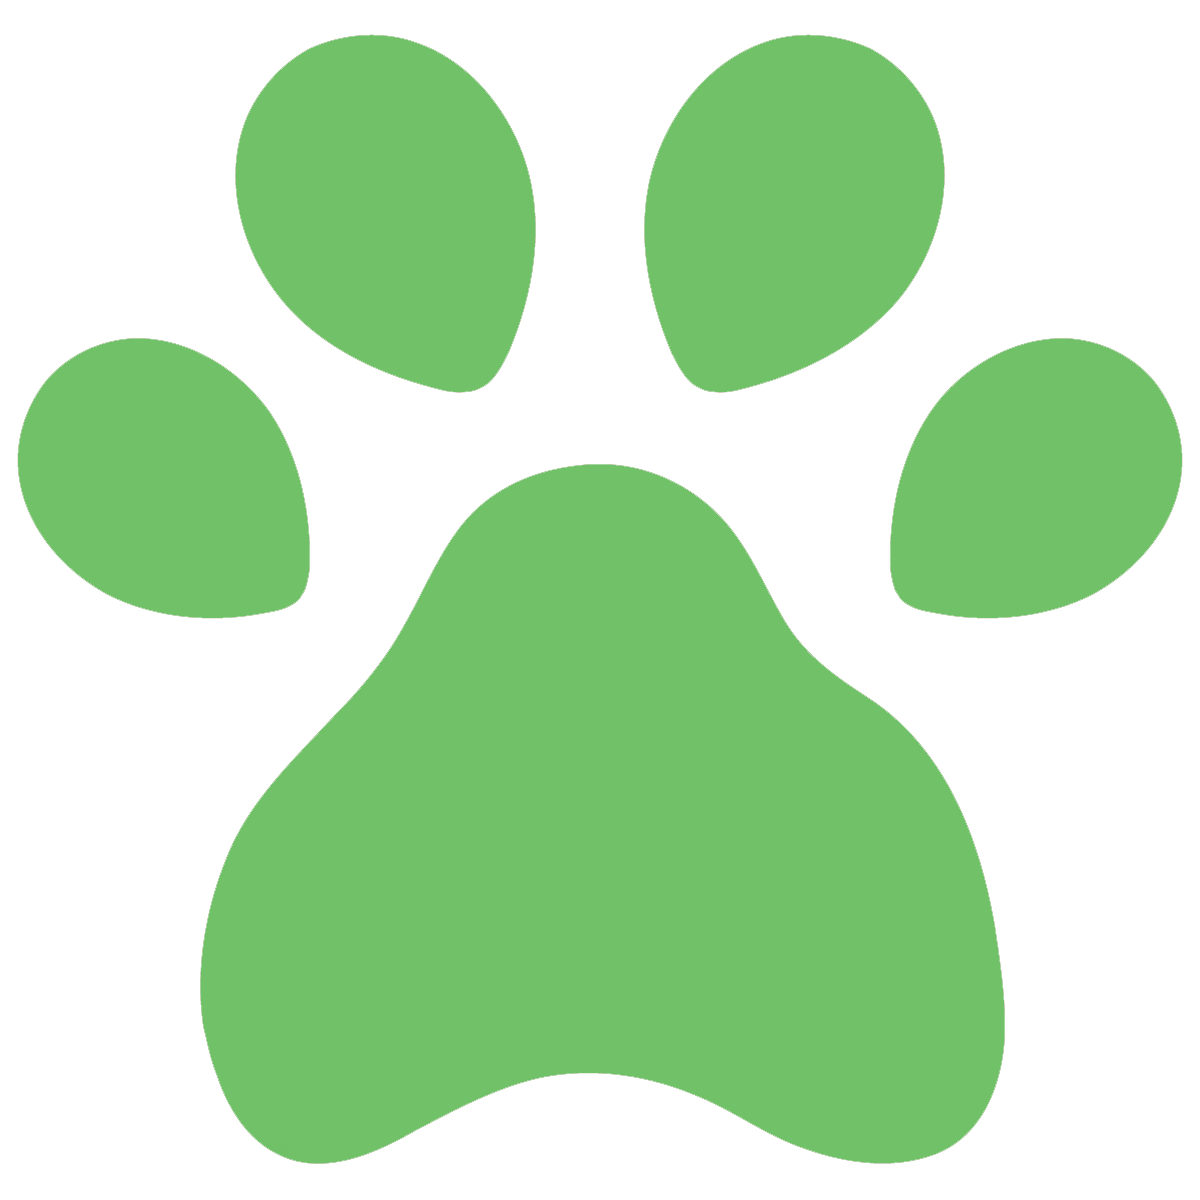 Capstar boite verte - Anti-puce chien>11 kg , 6 cp - ELANCO